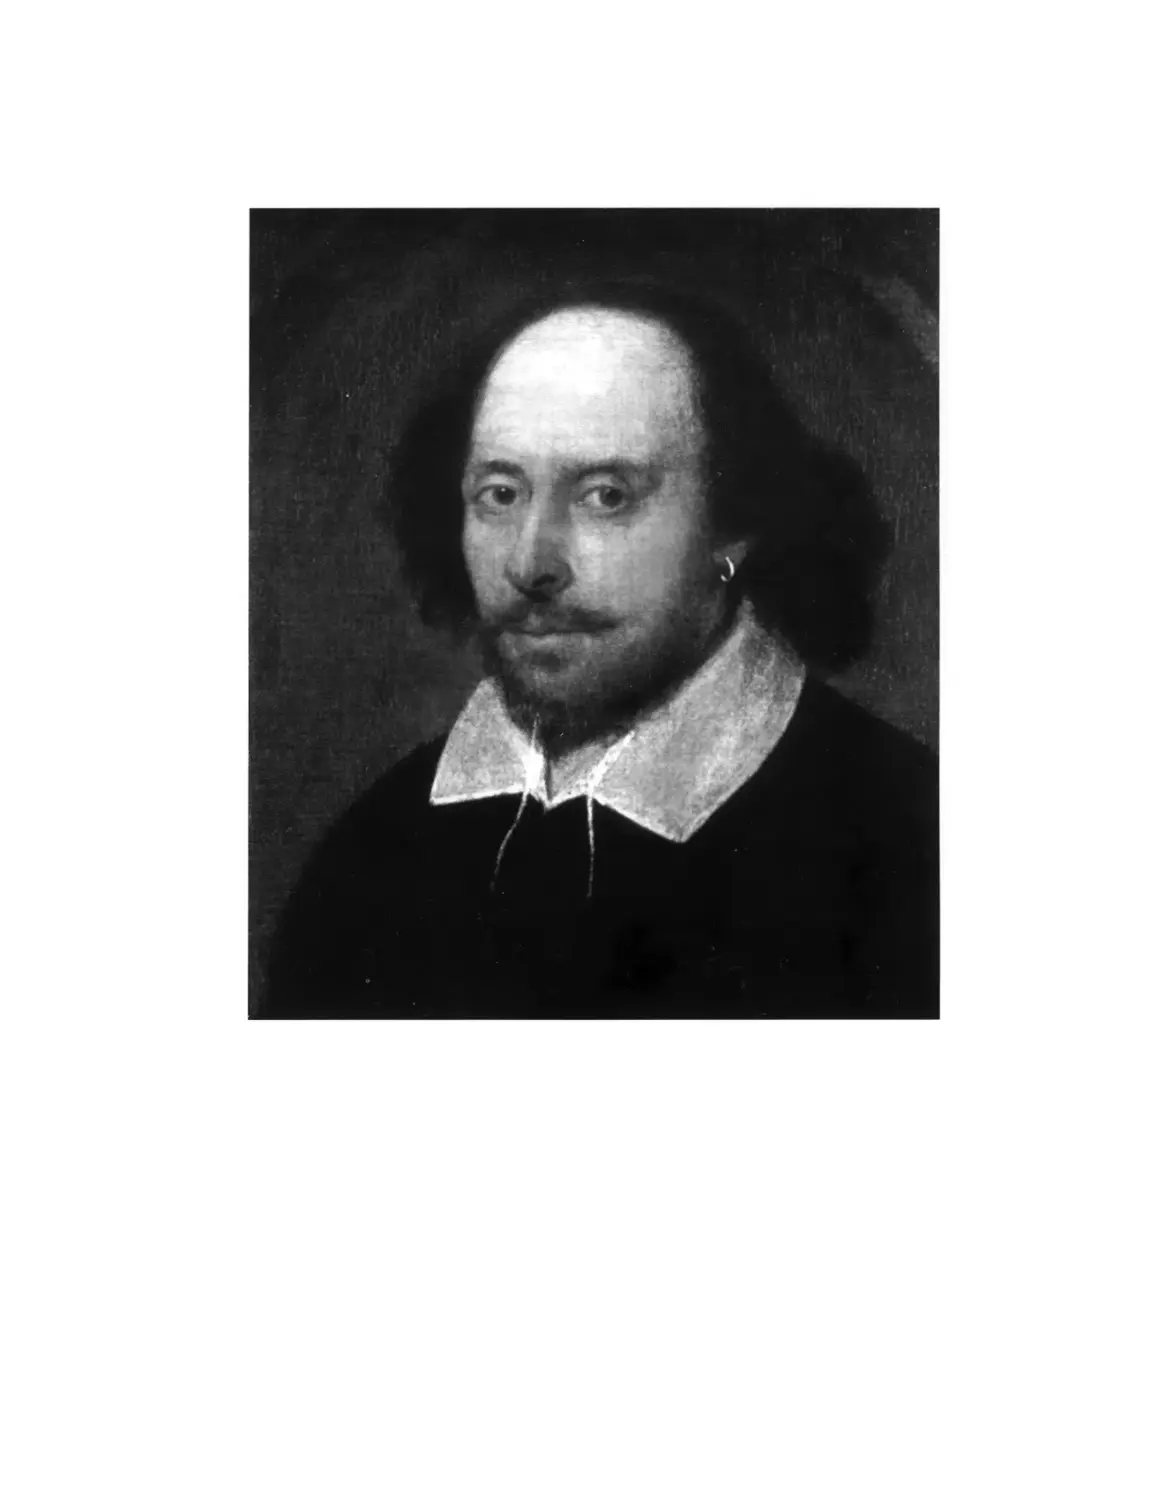 Шекспир Уильям. Король Лир: Кварто 1608, Фолио 1623 - 2013
Вклейка. Уильям Шекспир